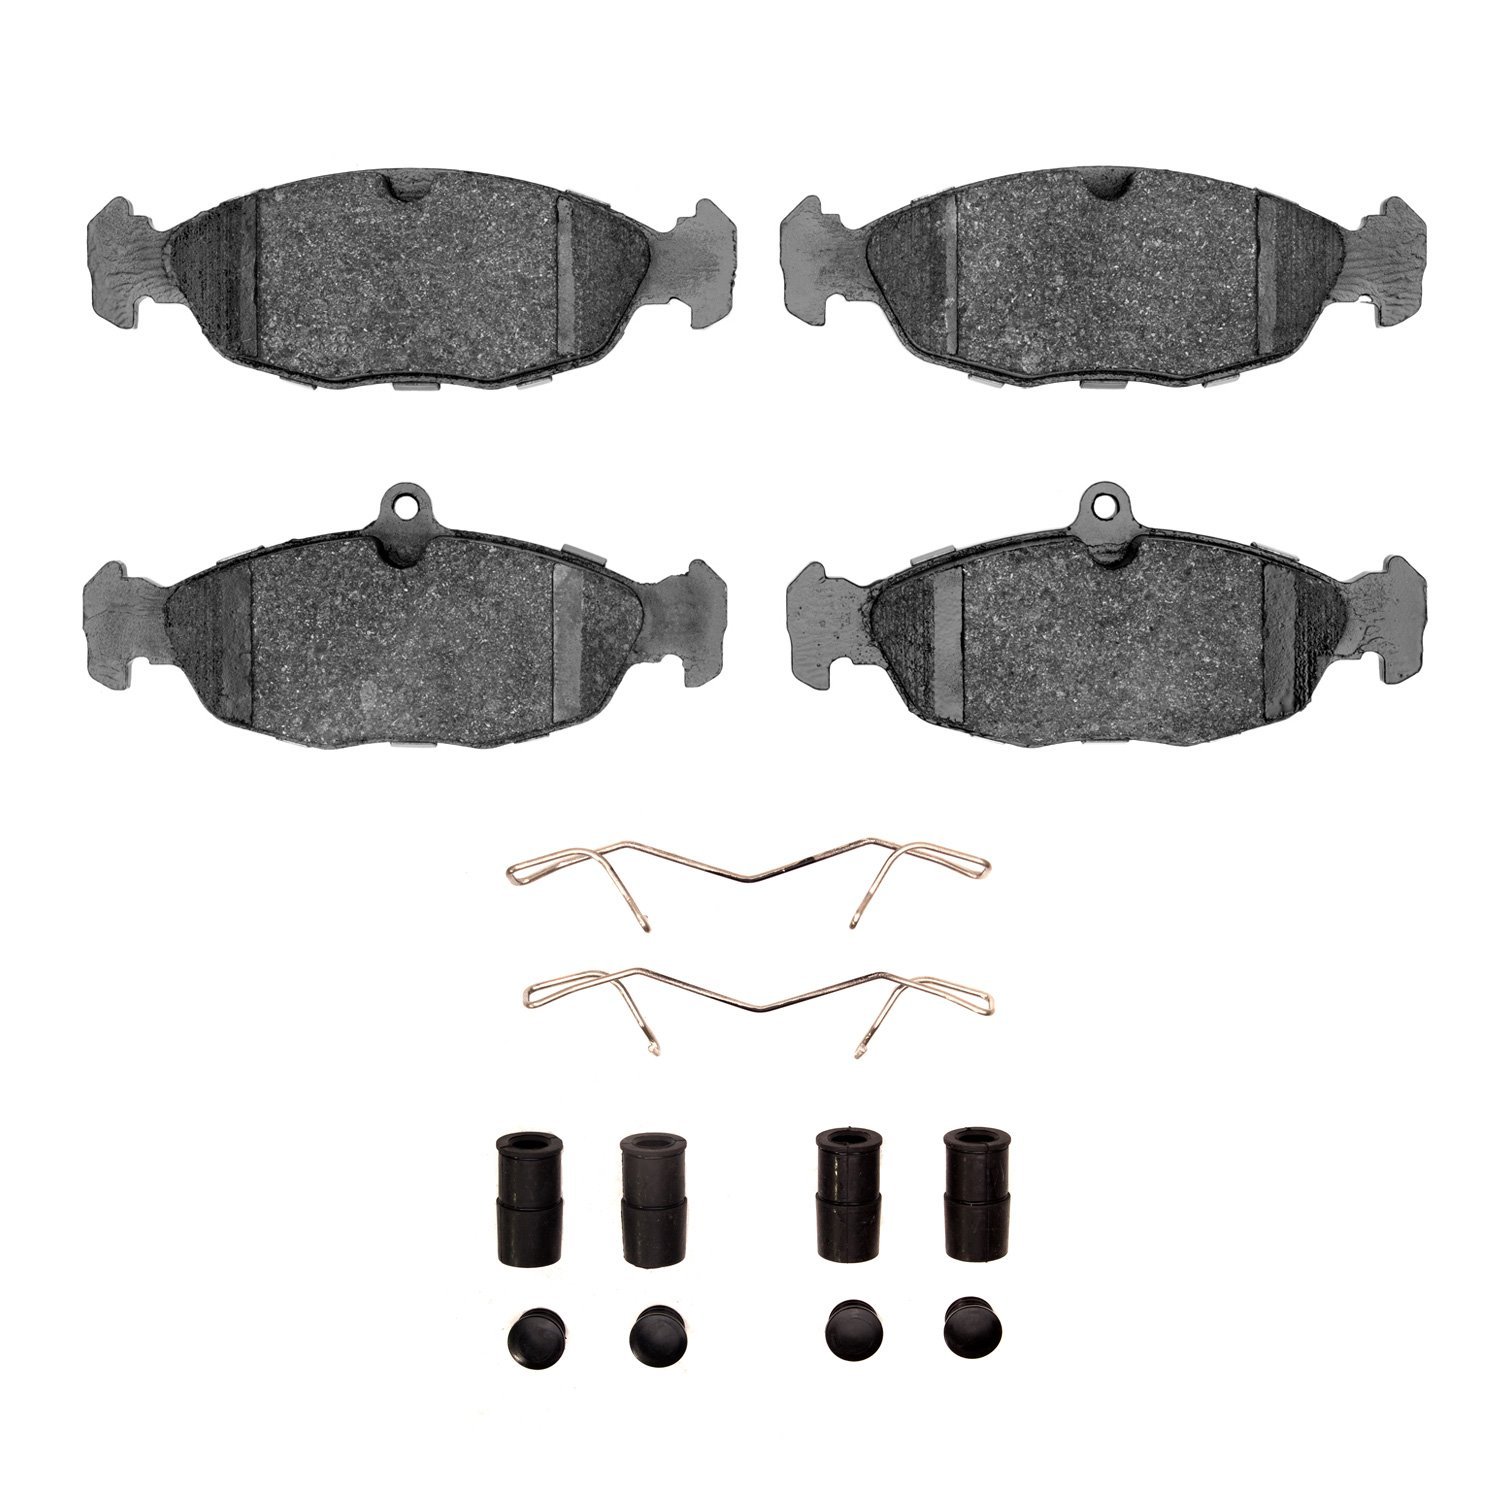 Semi-Metallic Brake Pads & Hardware Kit, 1995-1999 Fits Multiple Makes/Models, Position: Front & Rear